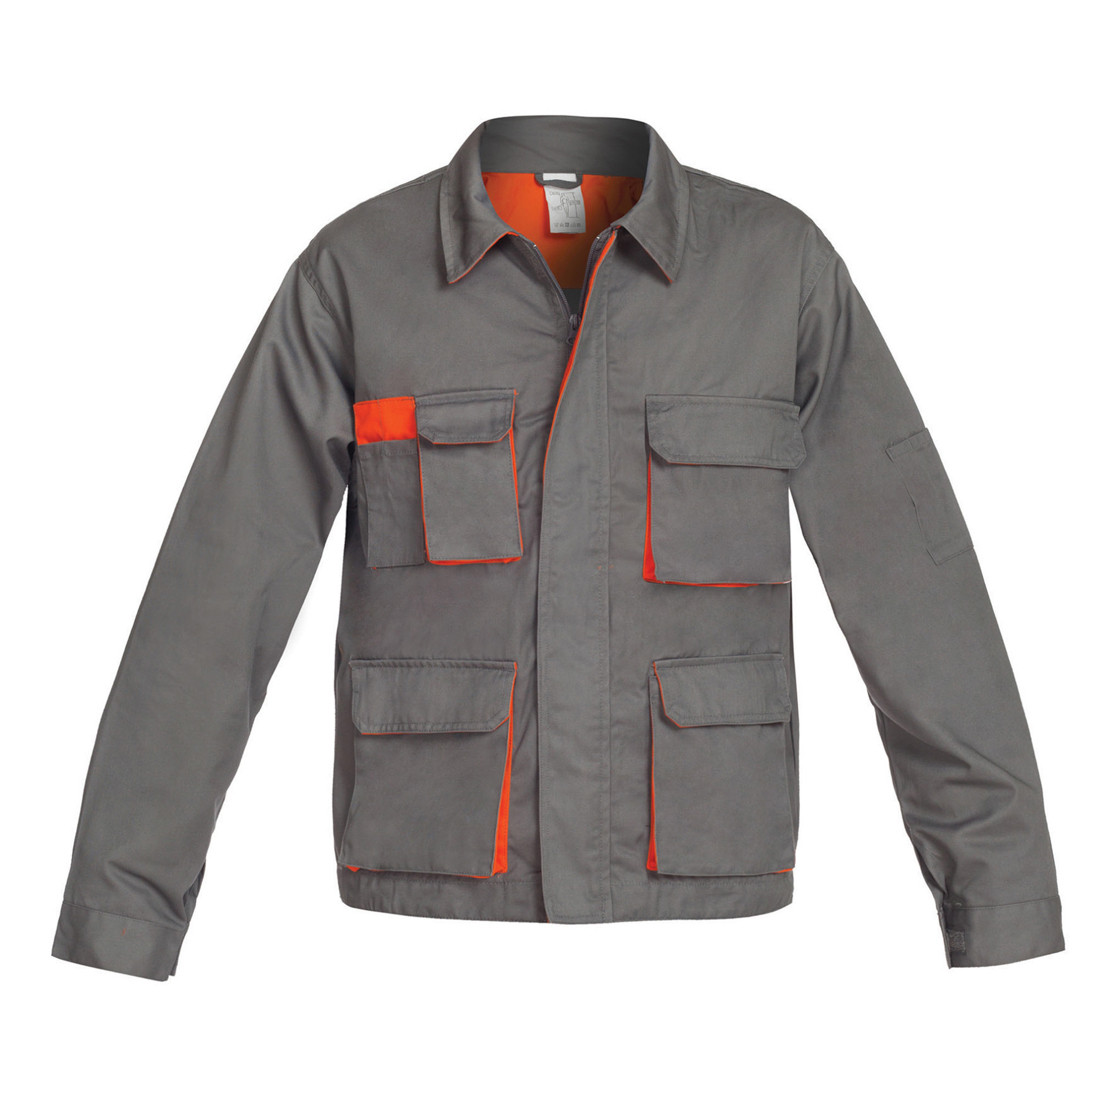 SIGMA Jacket - Safetywear